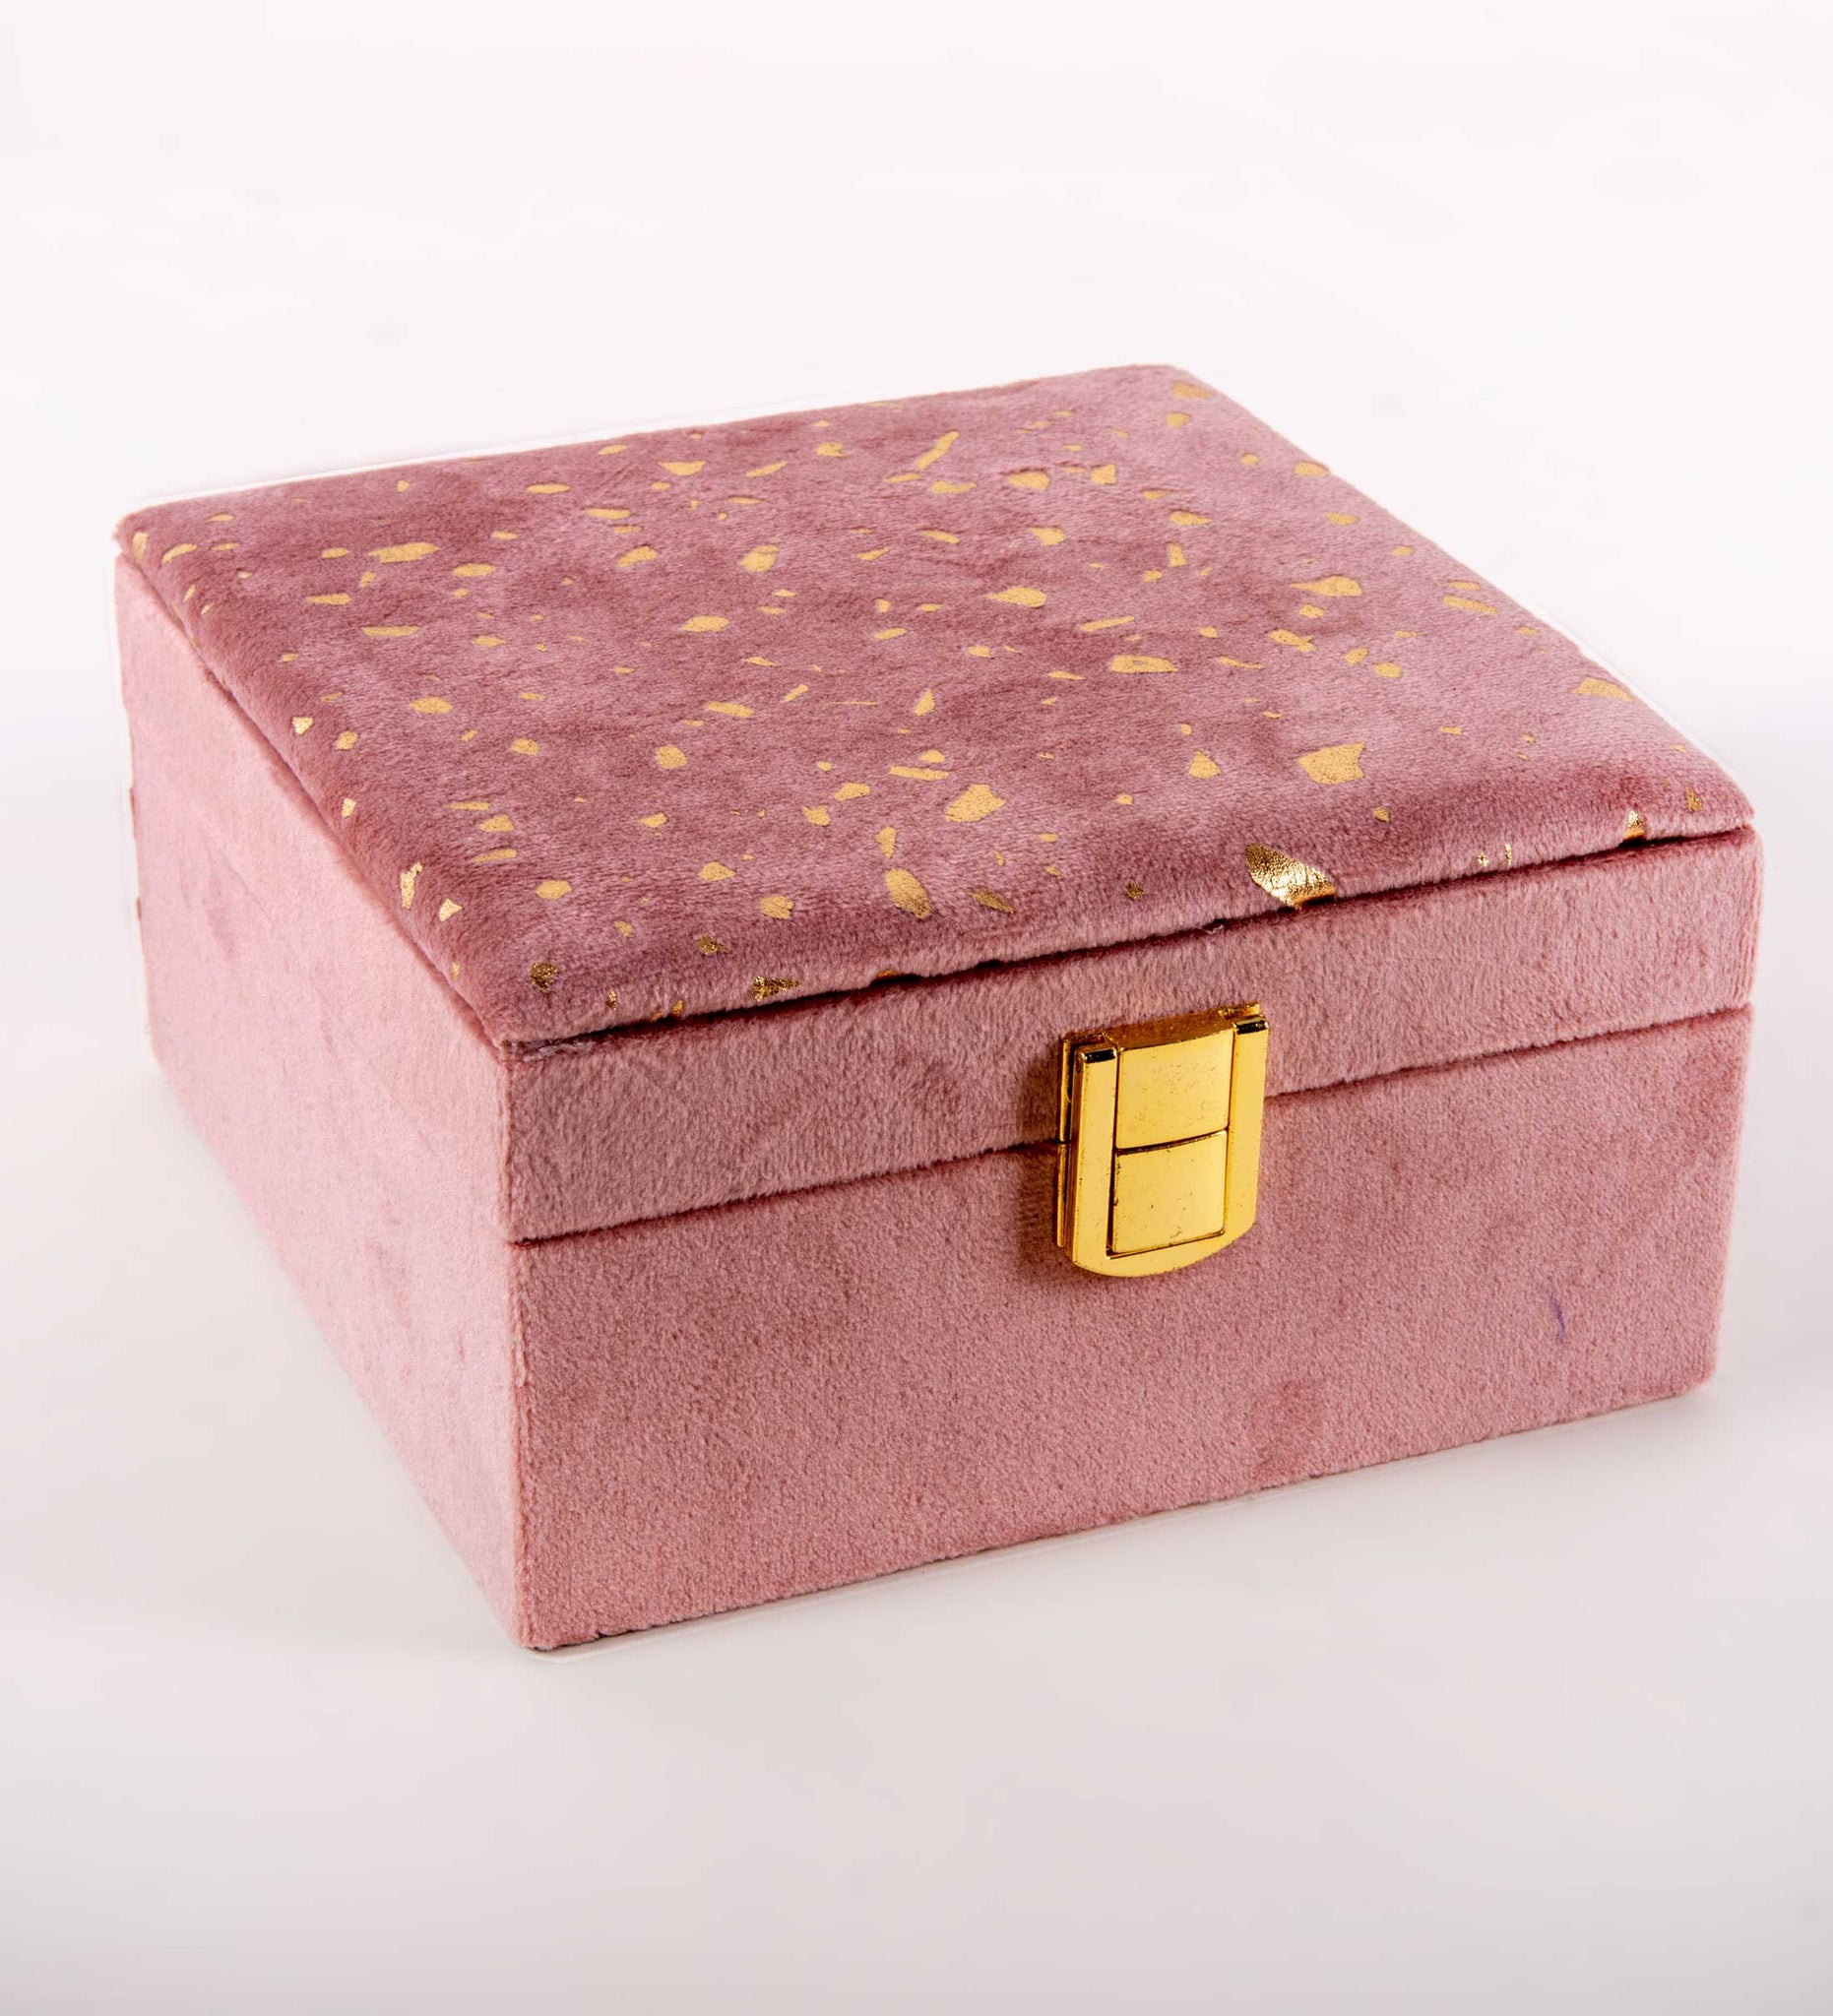 Caja cuad 15*8*15 terc rosa pintitas dorada